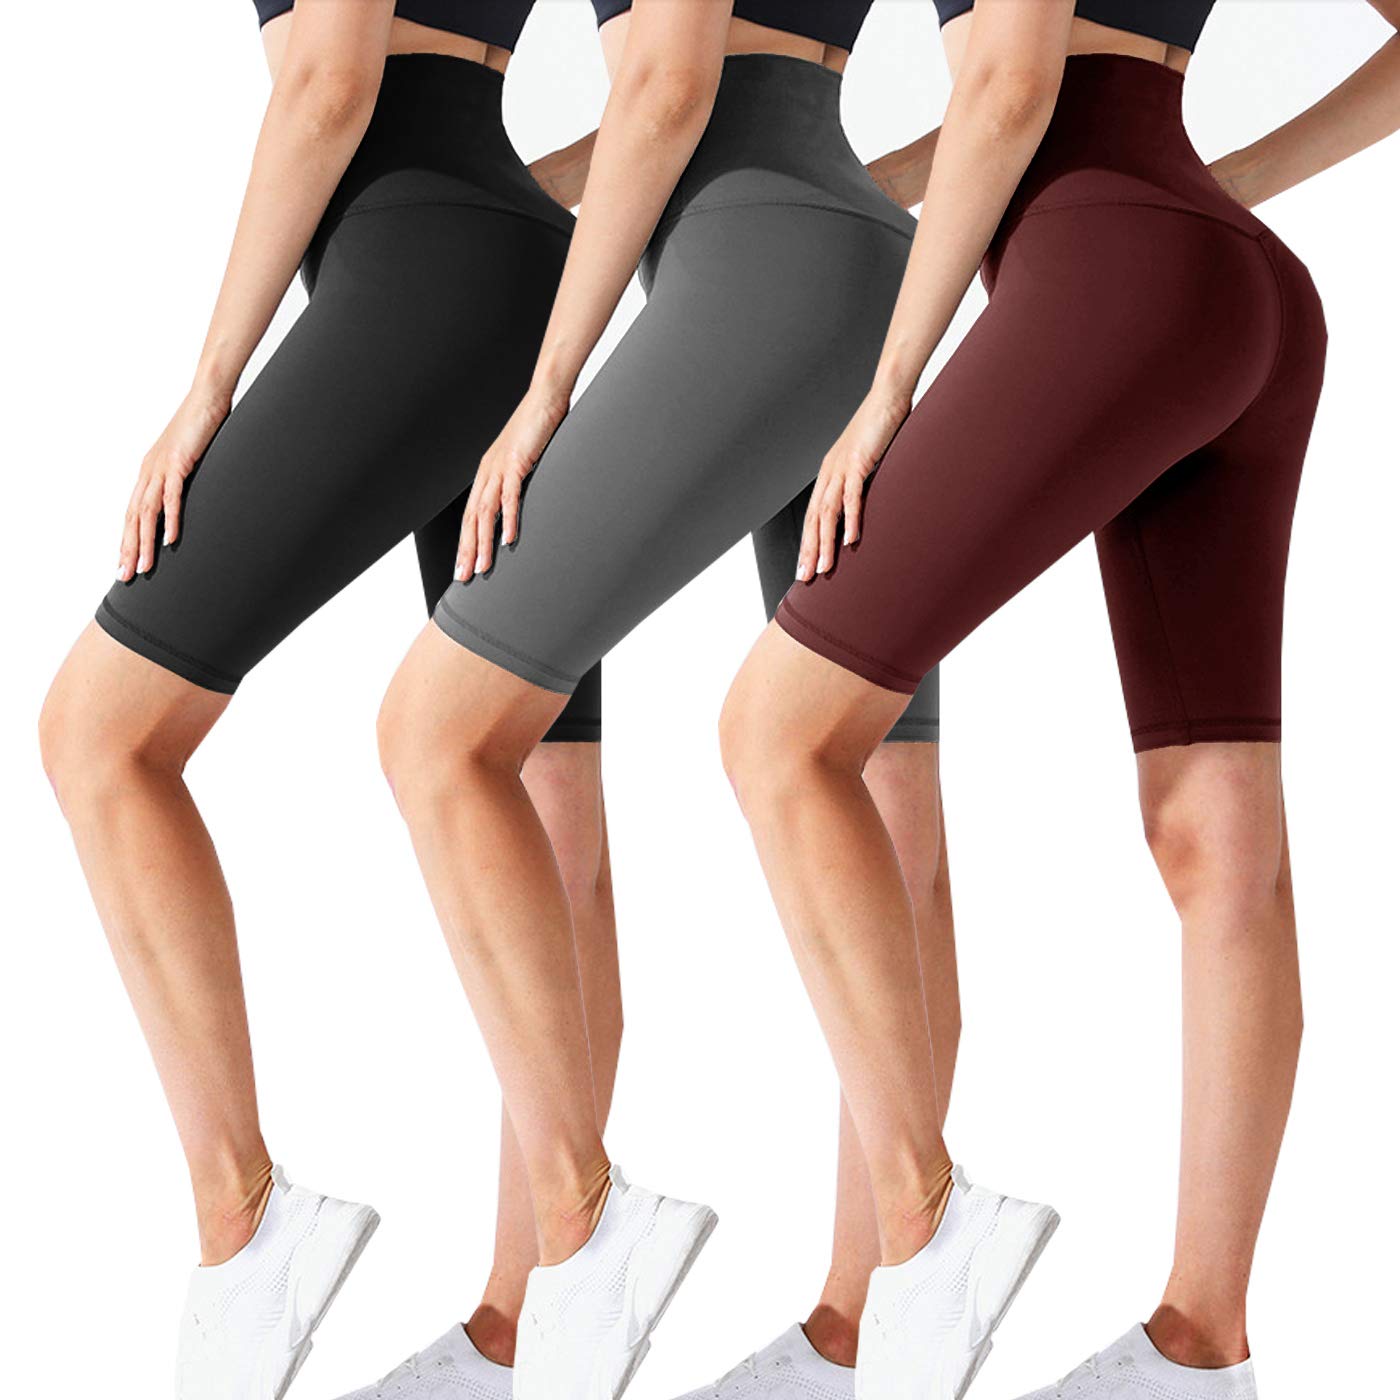 Fullsoft 3 Pack Biker Shorts Womens High Waisted Workout Running Athletic Shorts Leggings